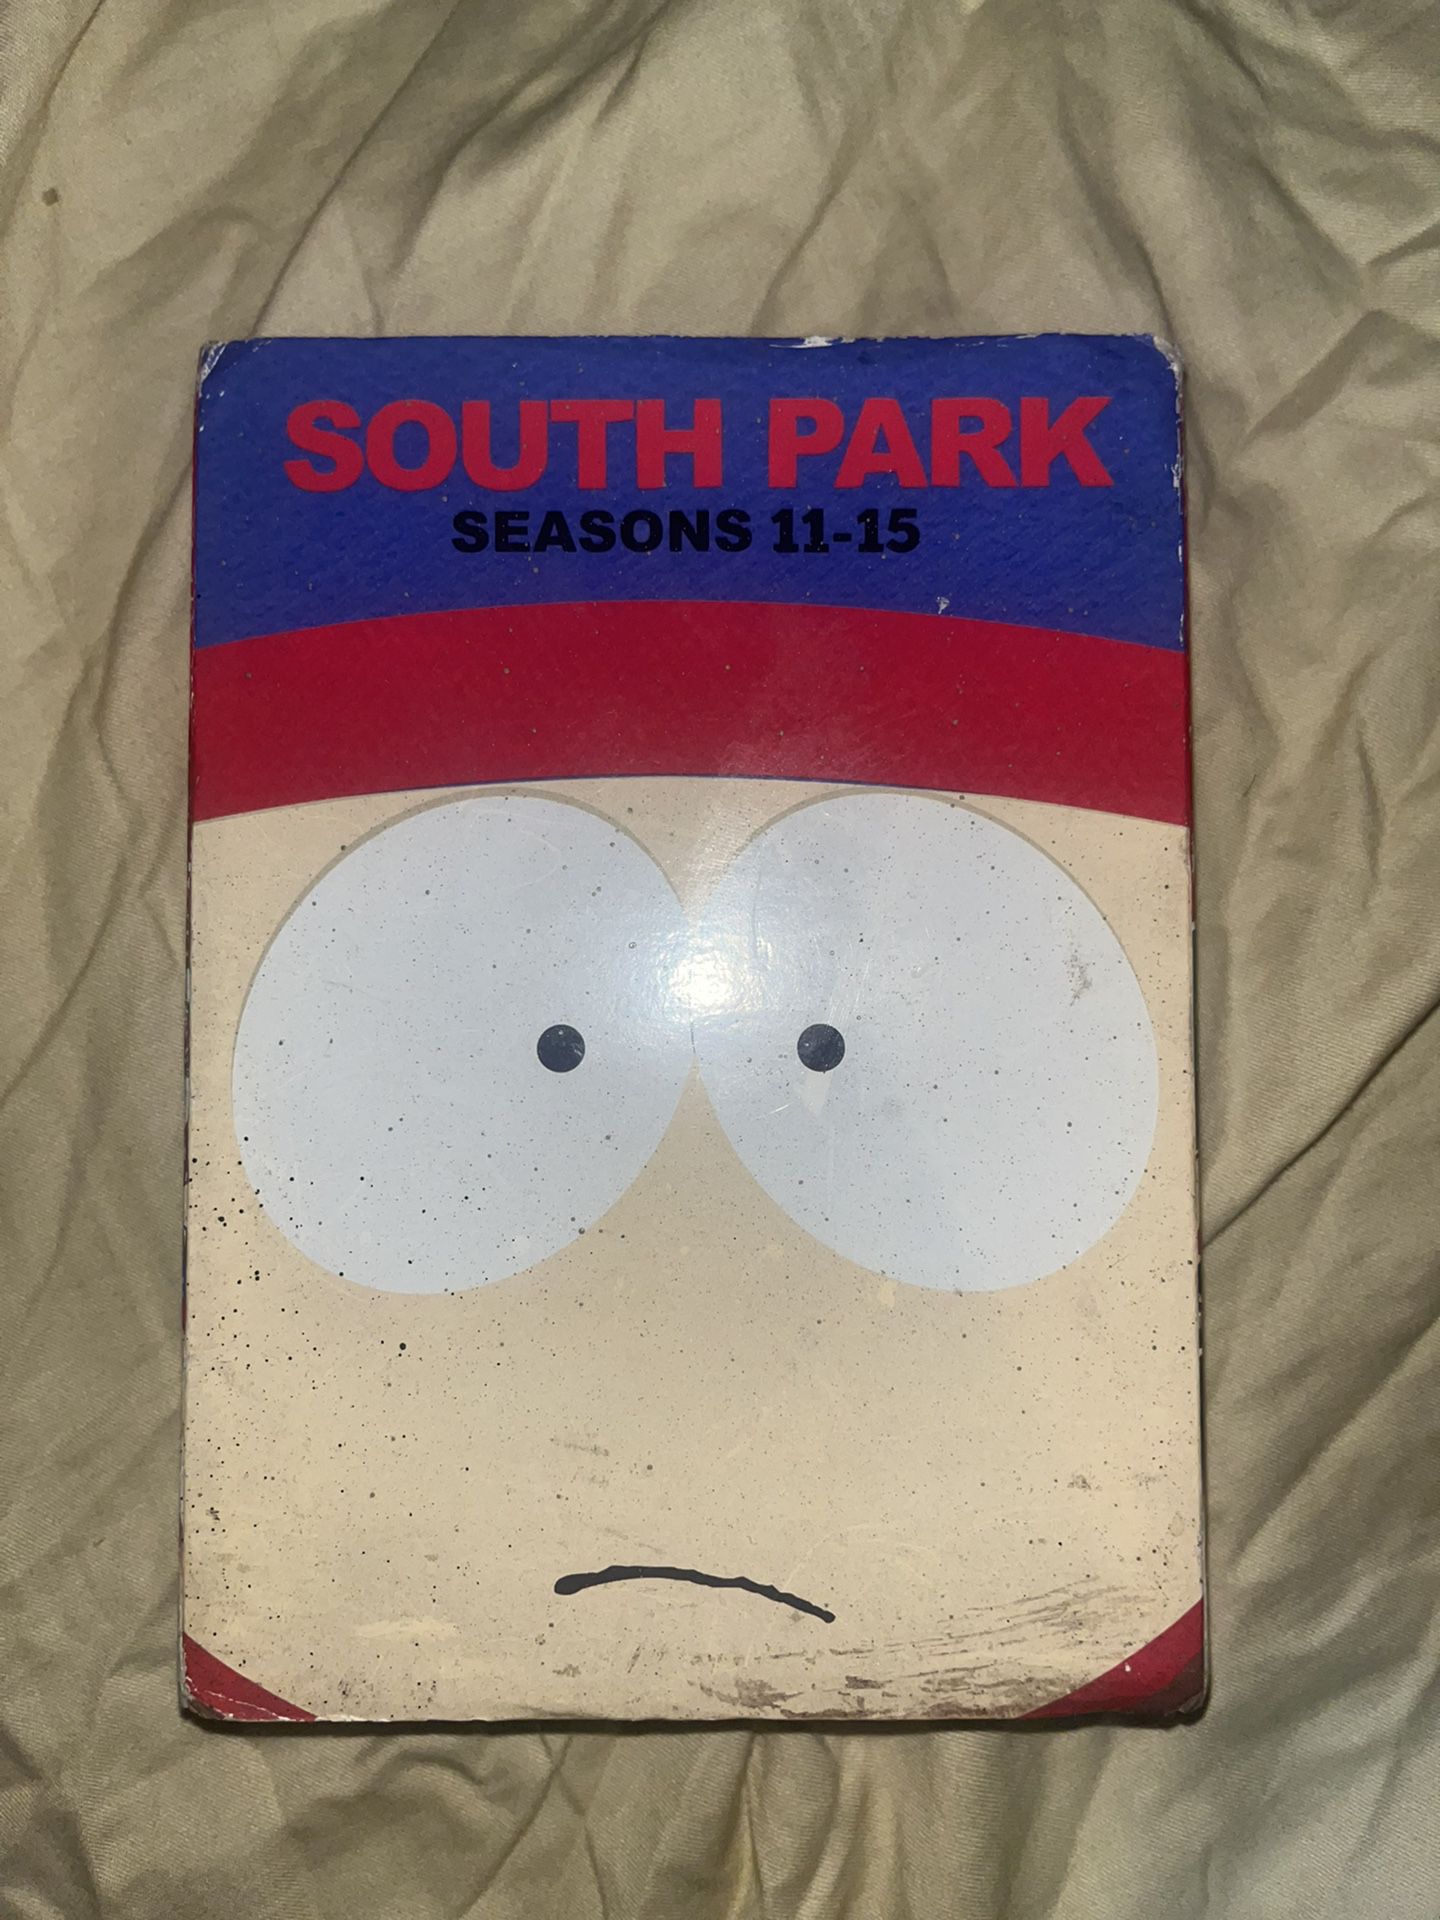 South Park seasons 11-15 Box set